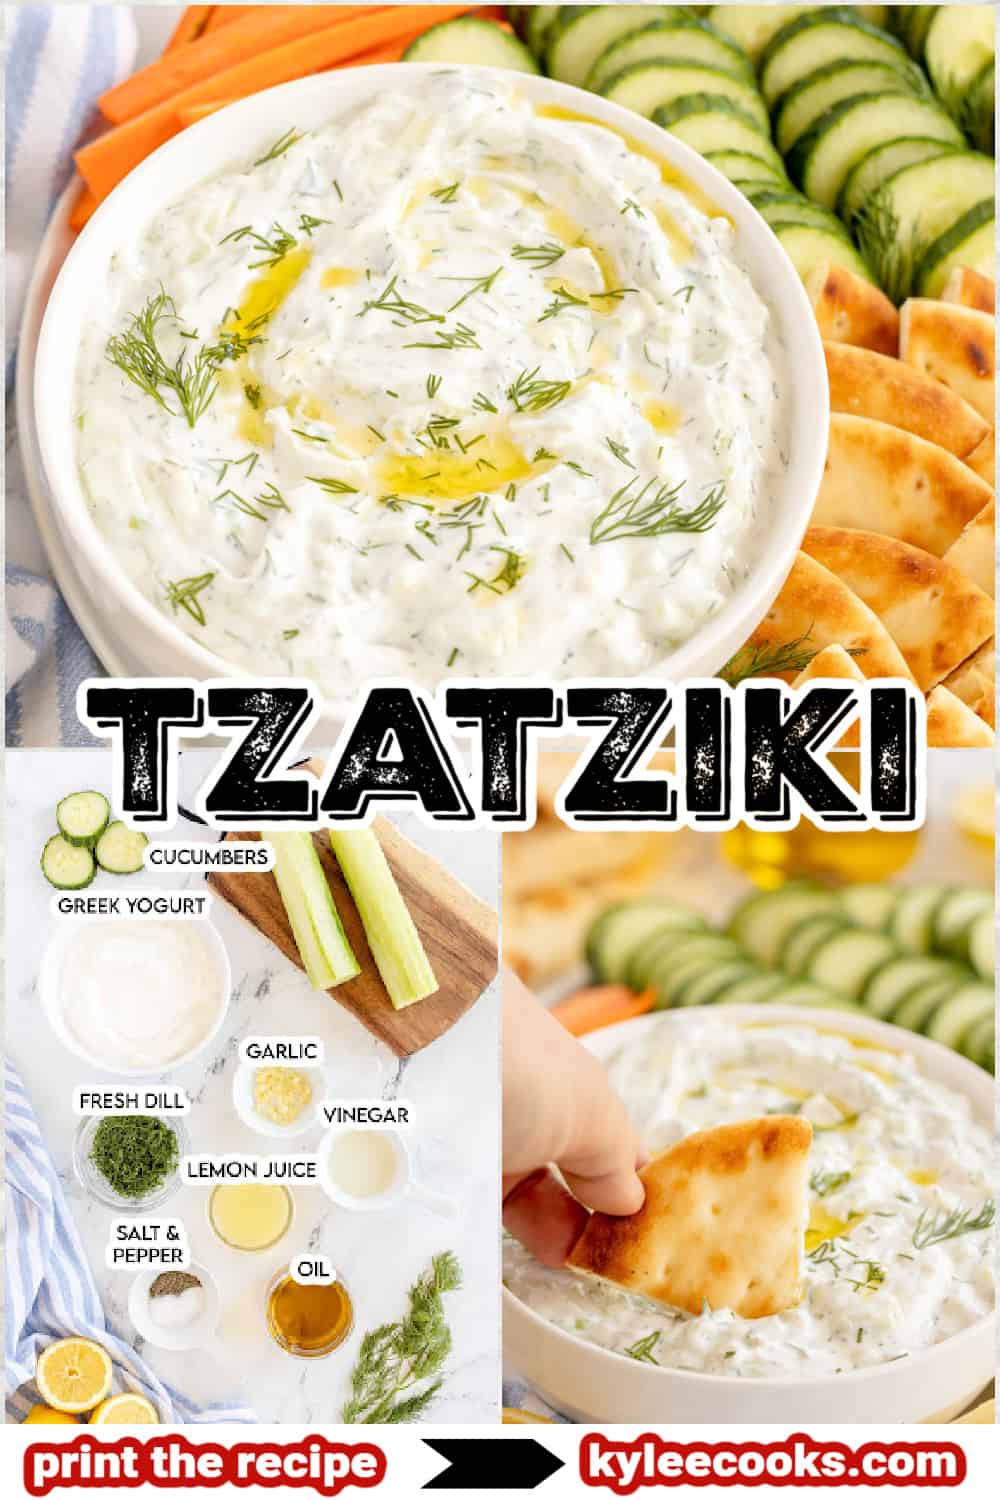 tzatziki greek yogurt tip with recipe name overlaid in text